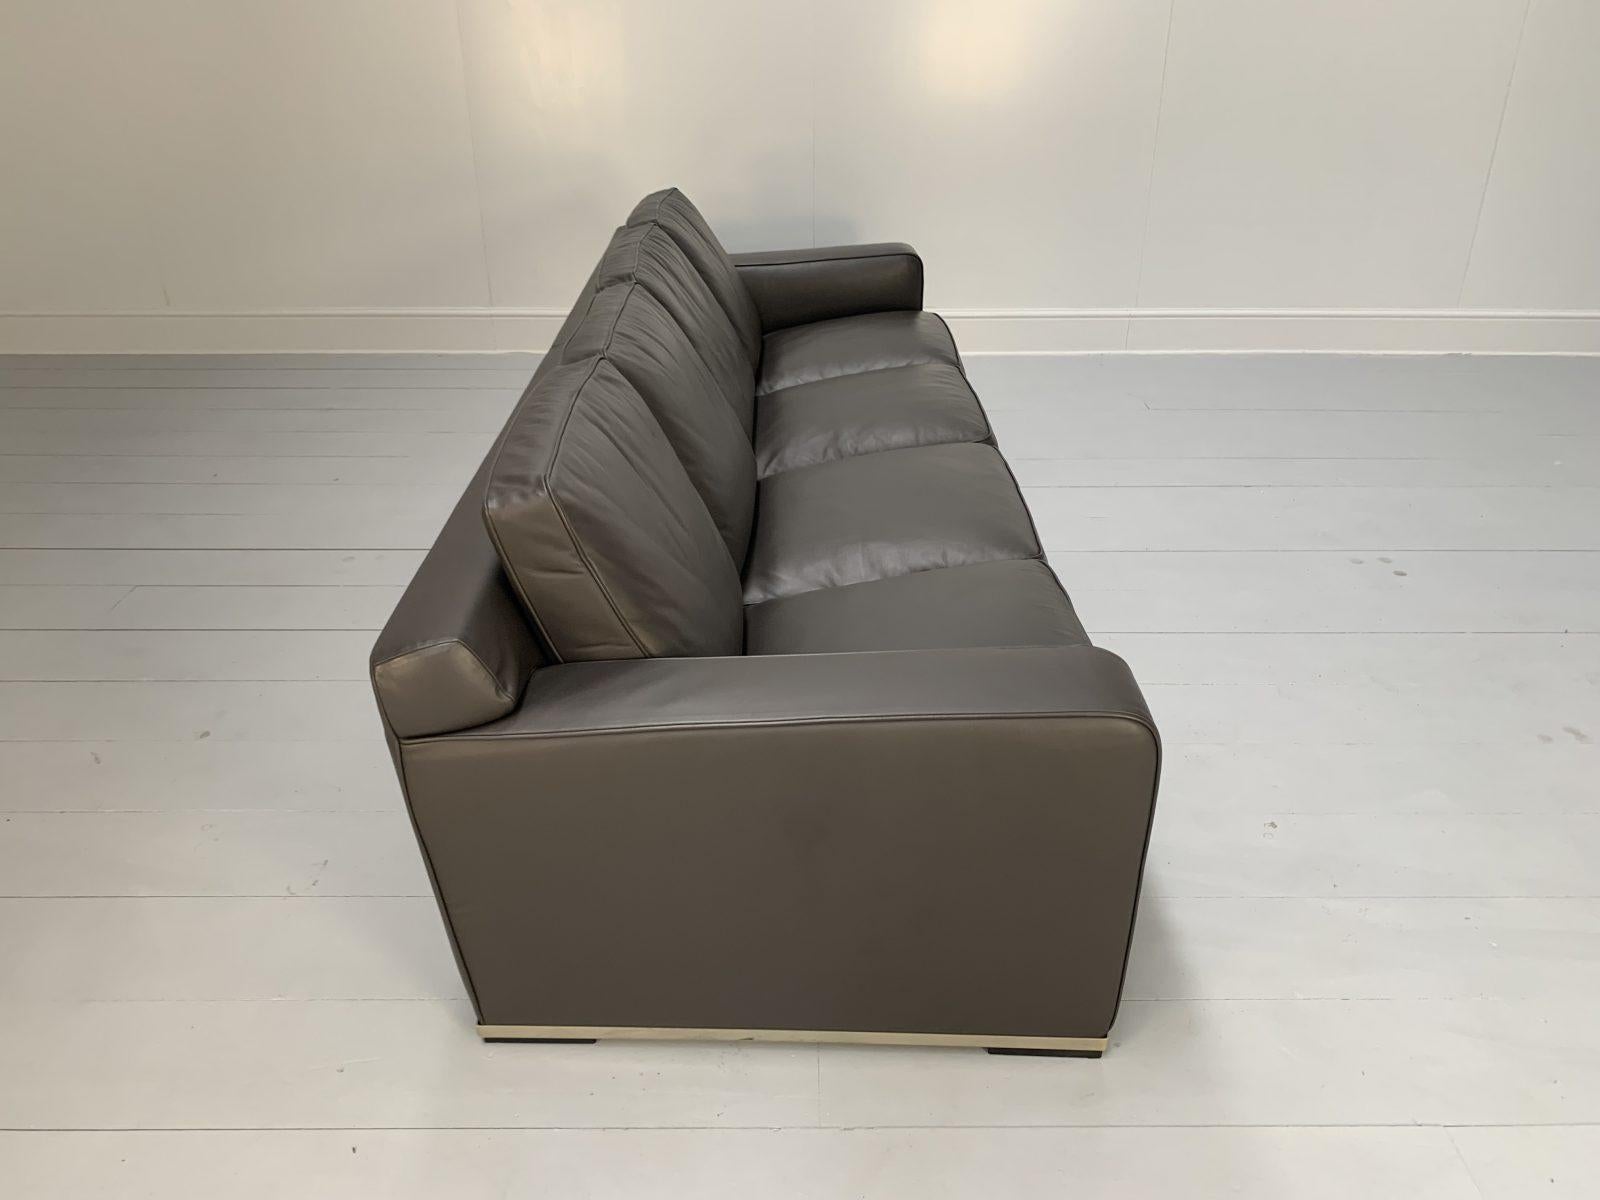 B&B Italia “Imprimateur Apta” 4-Seat Sofa in Dark Grey “Gamma” Leather For Sale 4